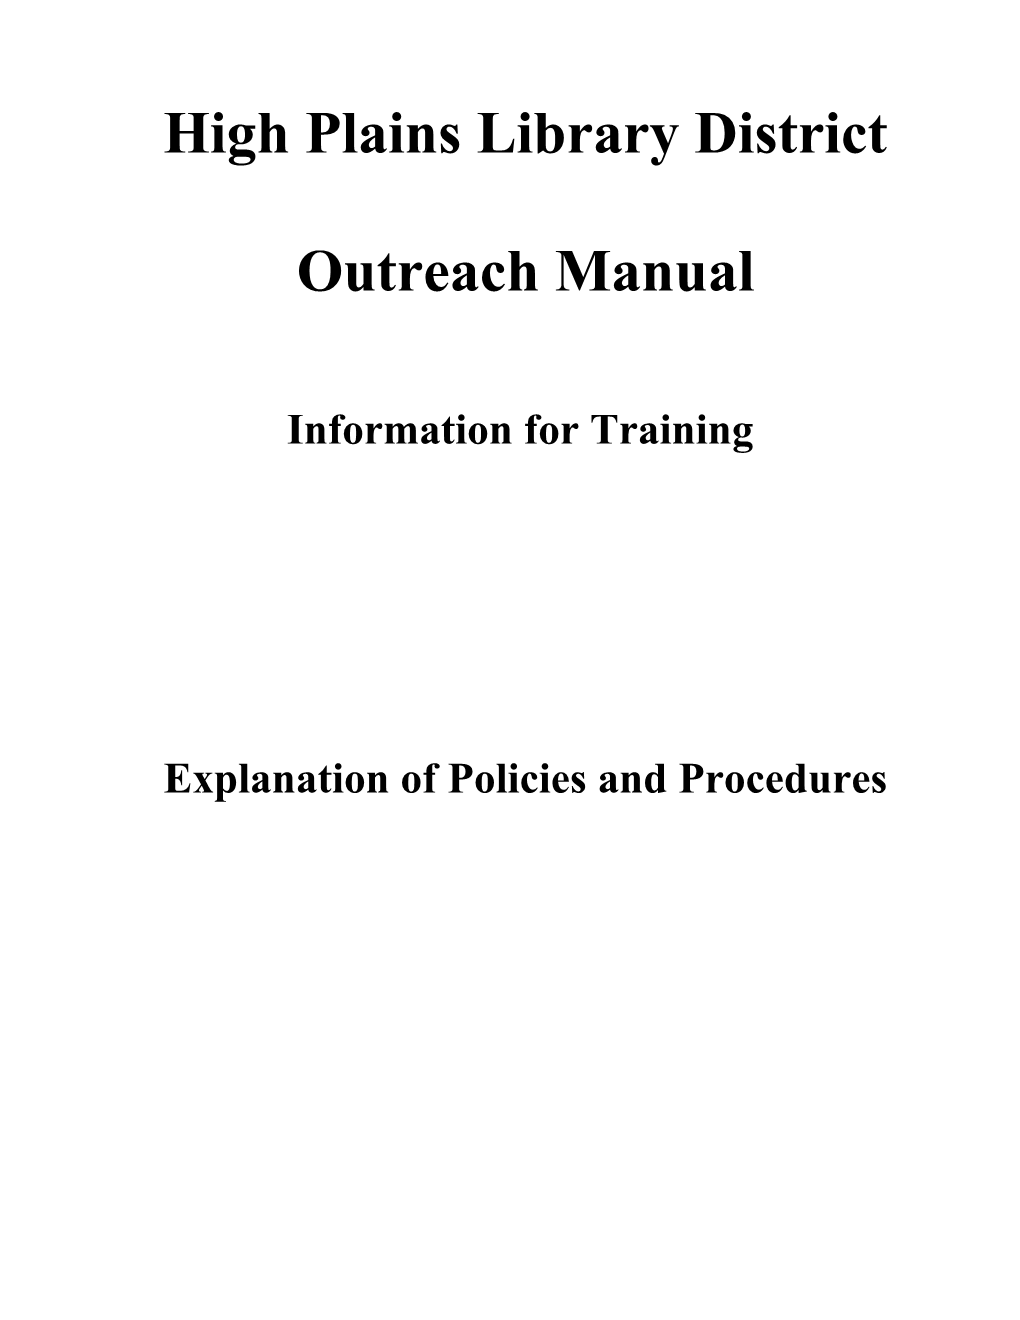 Training Manual Circulation Index